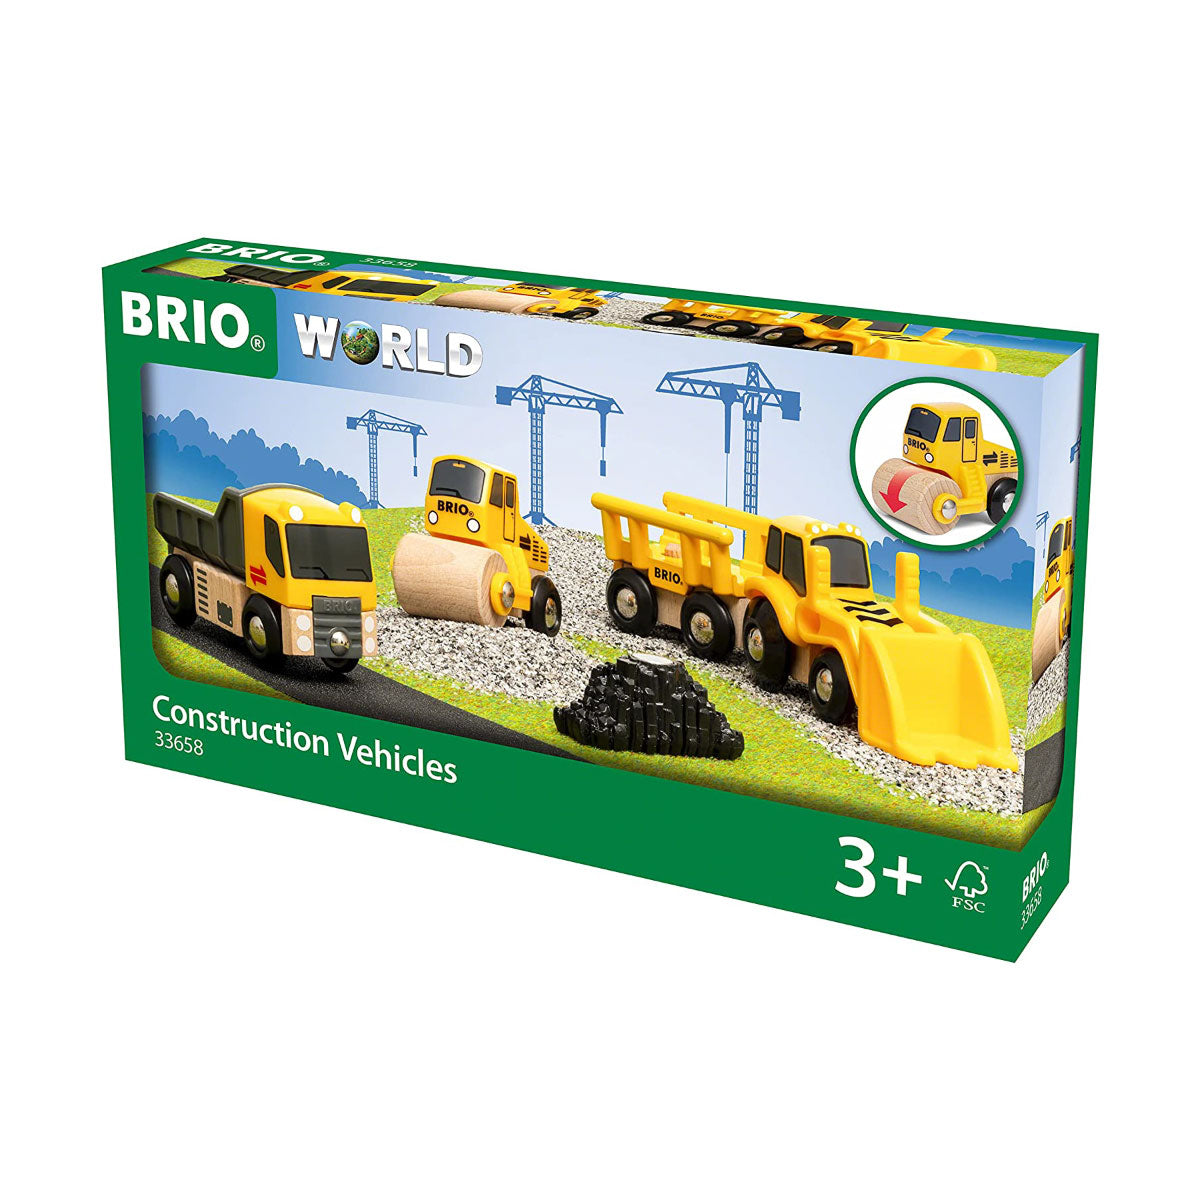 Brio World Construction Vehicles